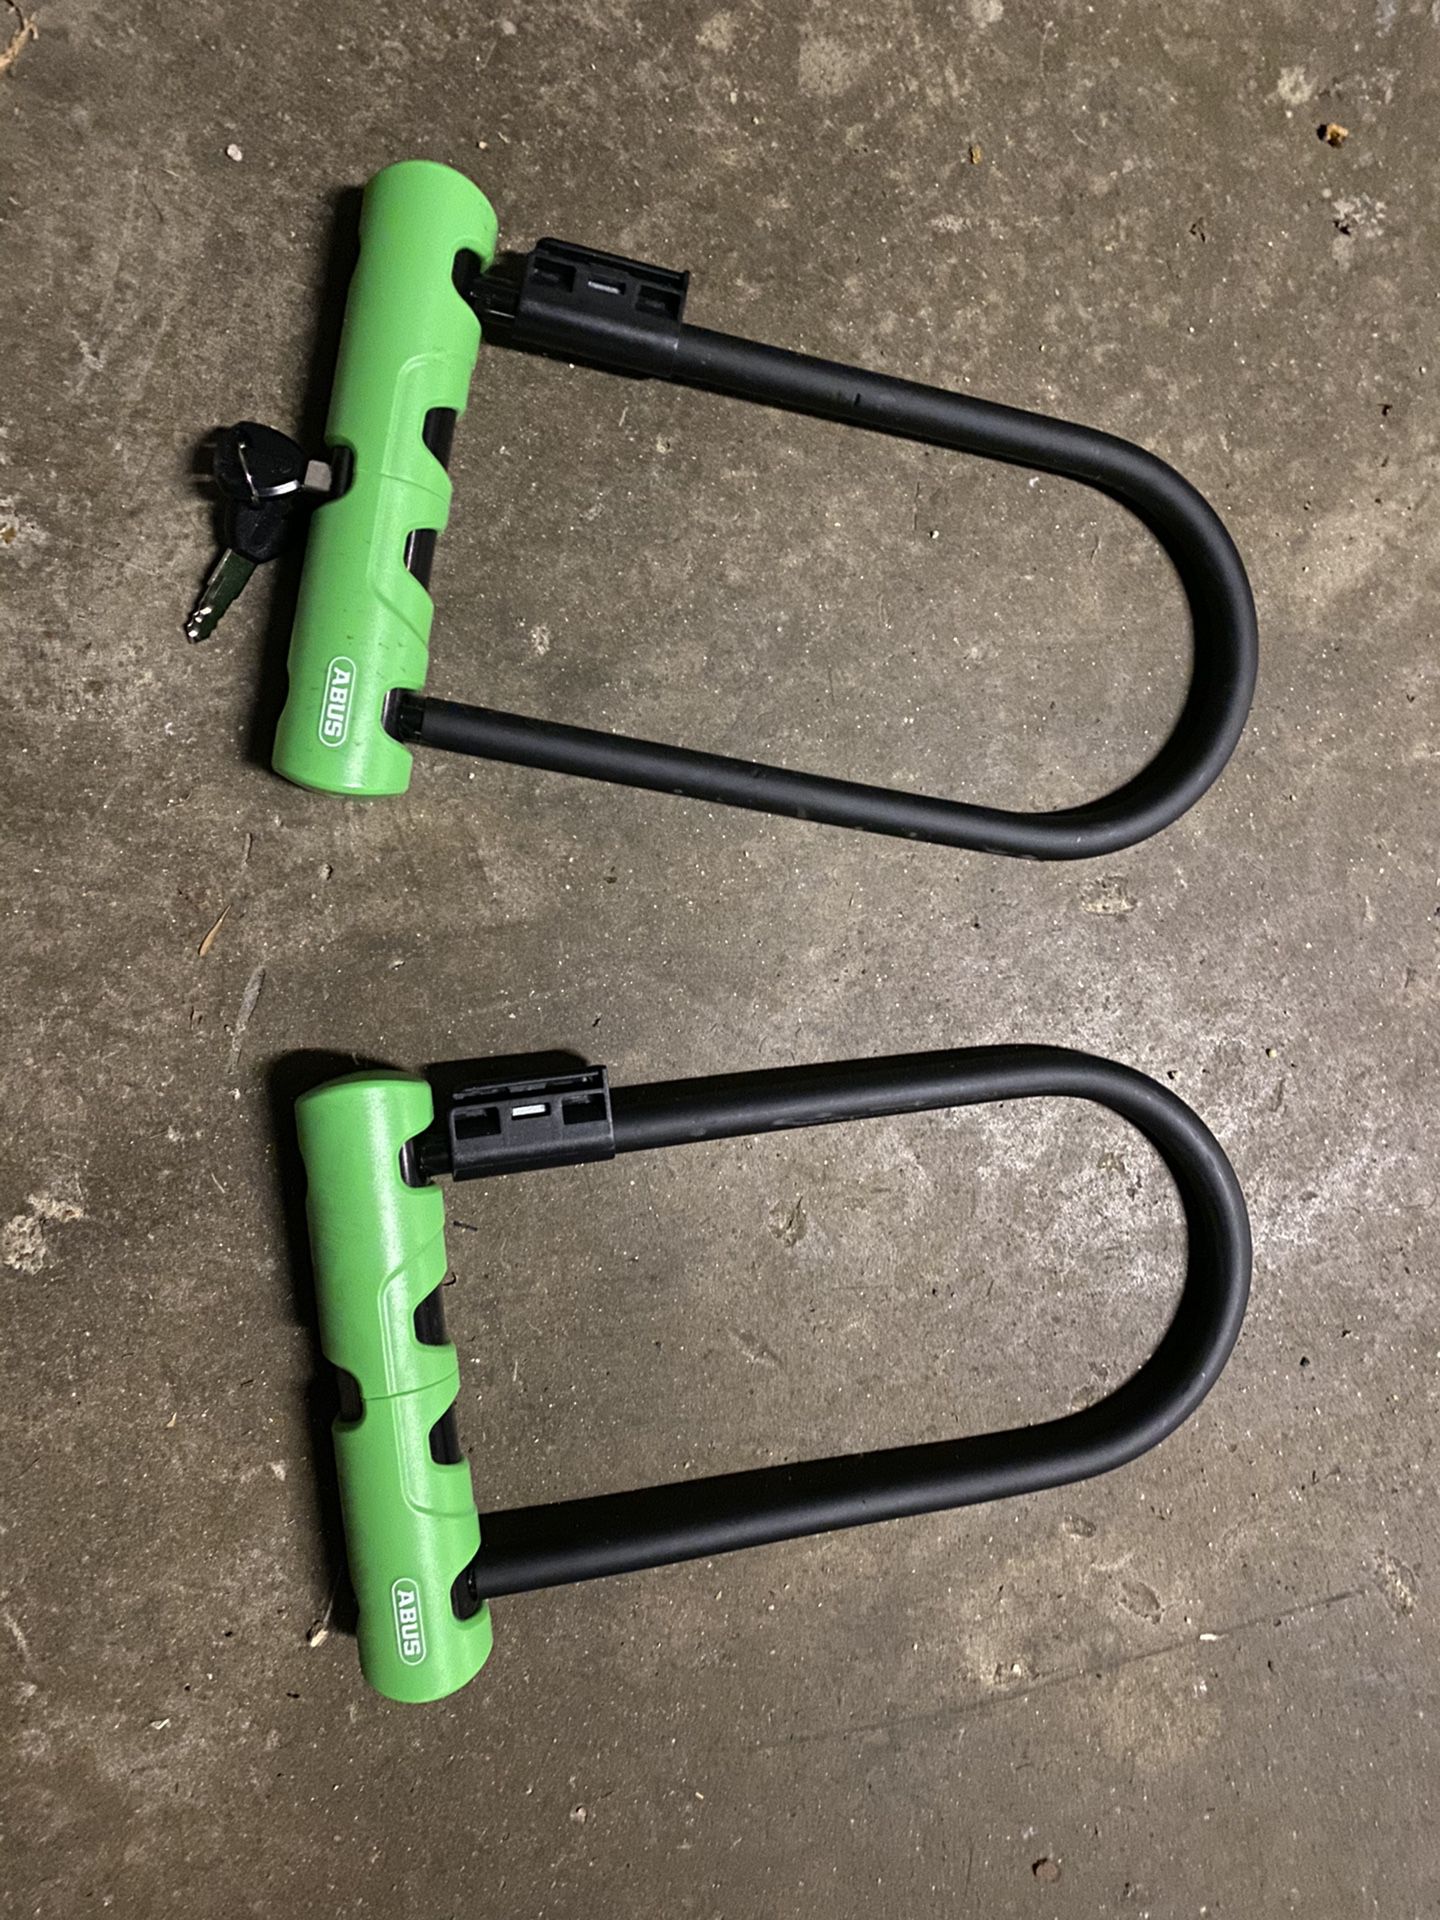 bike accessories( locks lights phone holders and bike basket)